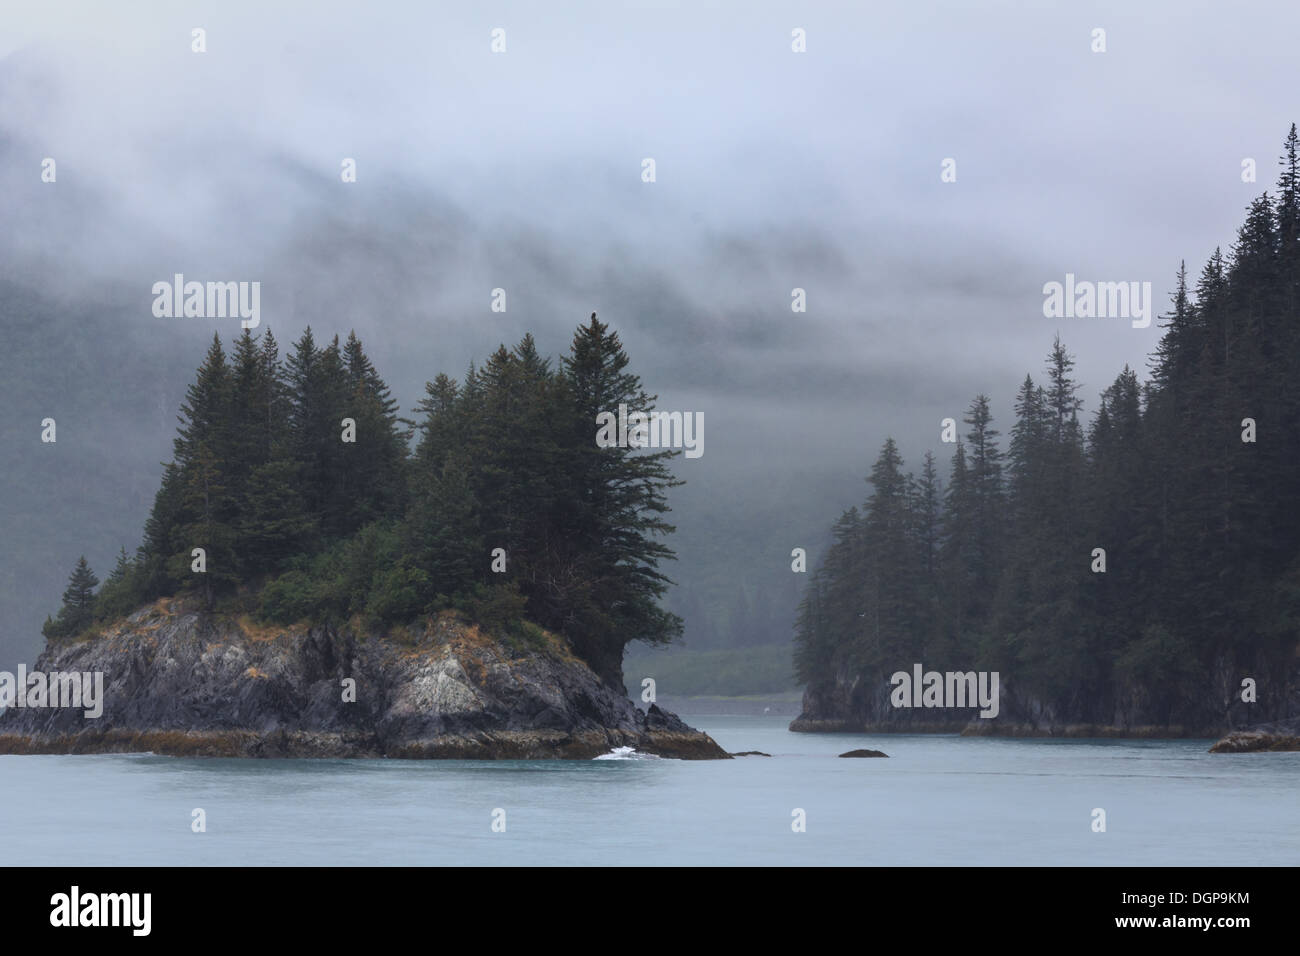 Fog clears around island of pine trees in Alaska Stock Photo